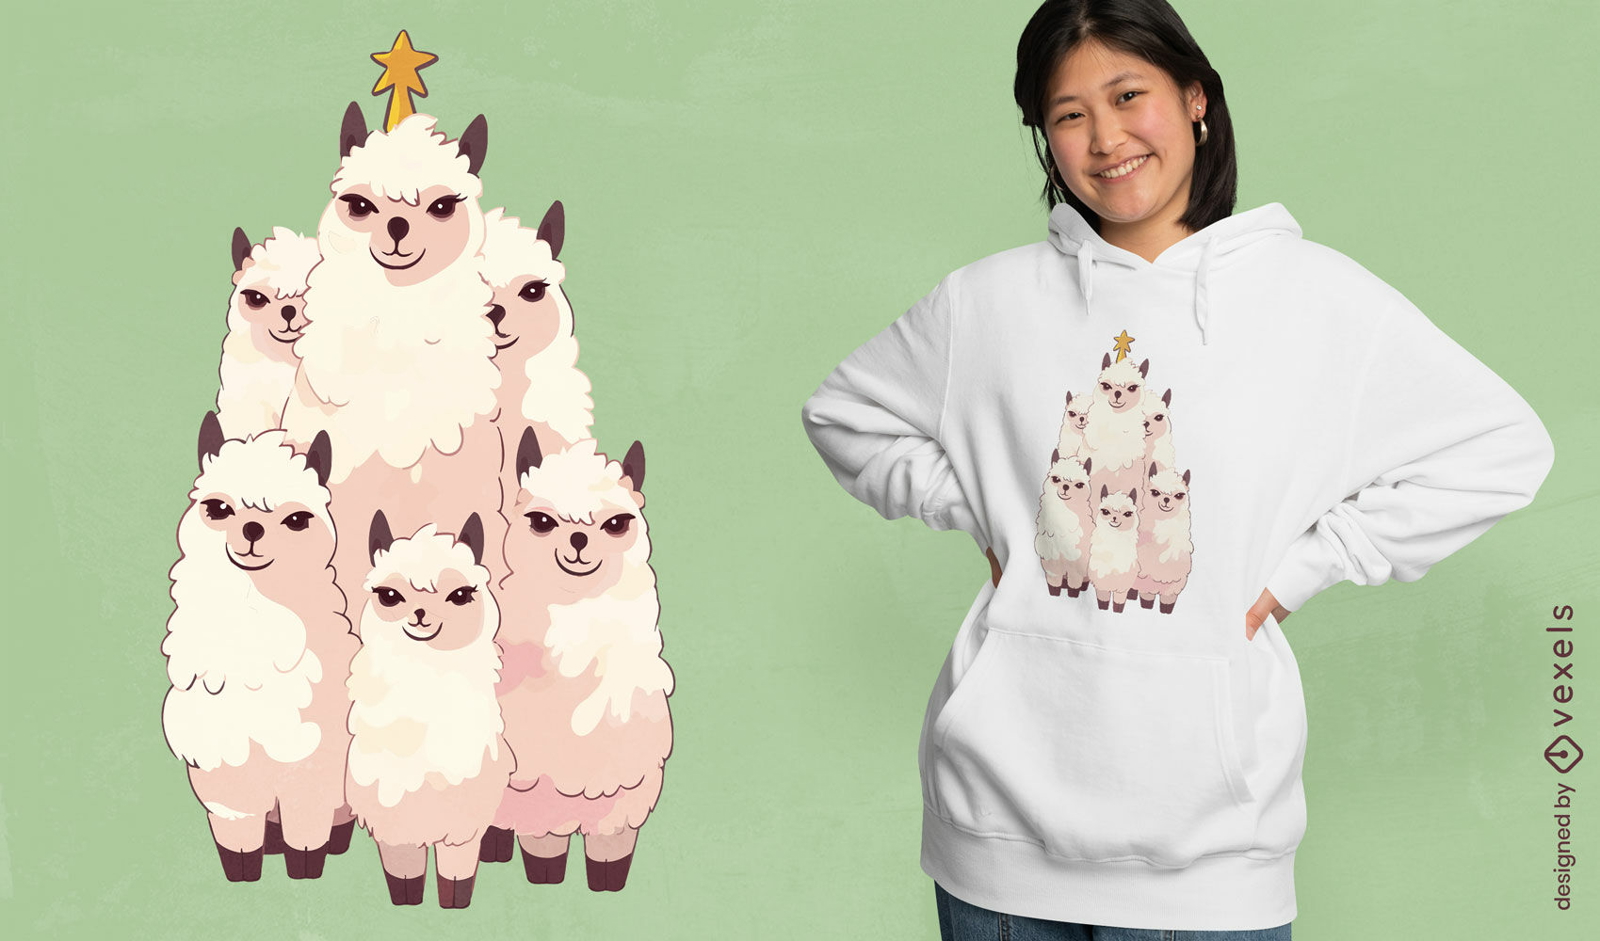 Llama christmas tree t-shirt design